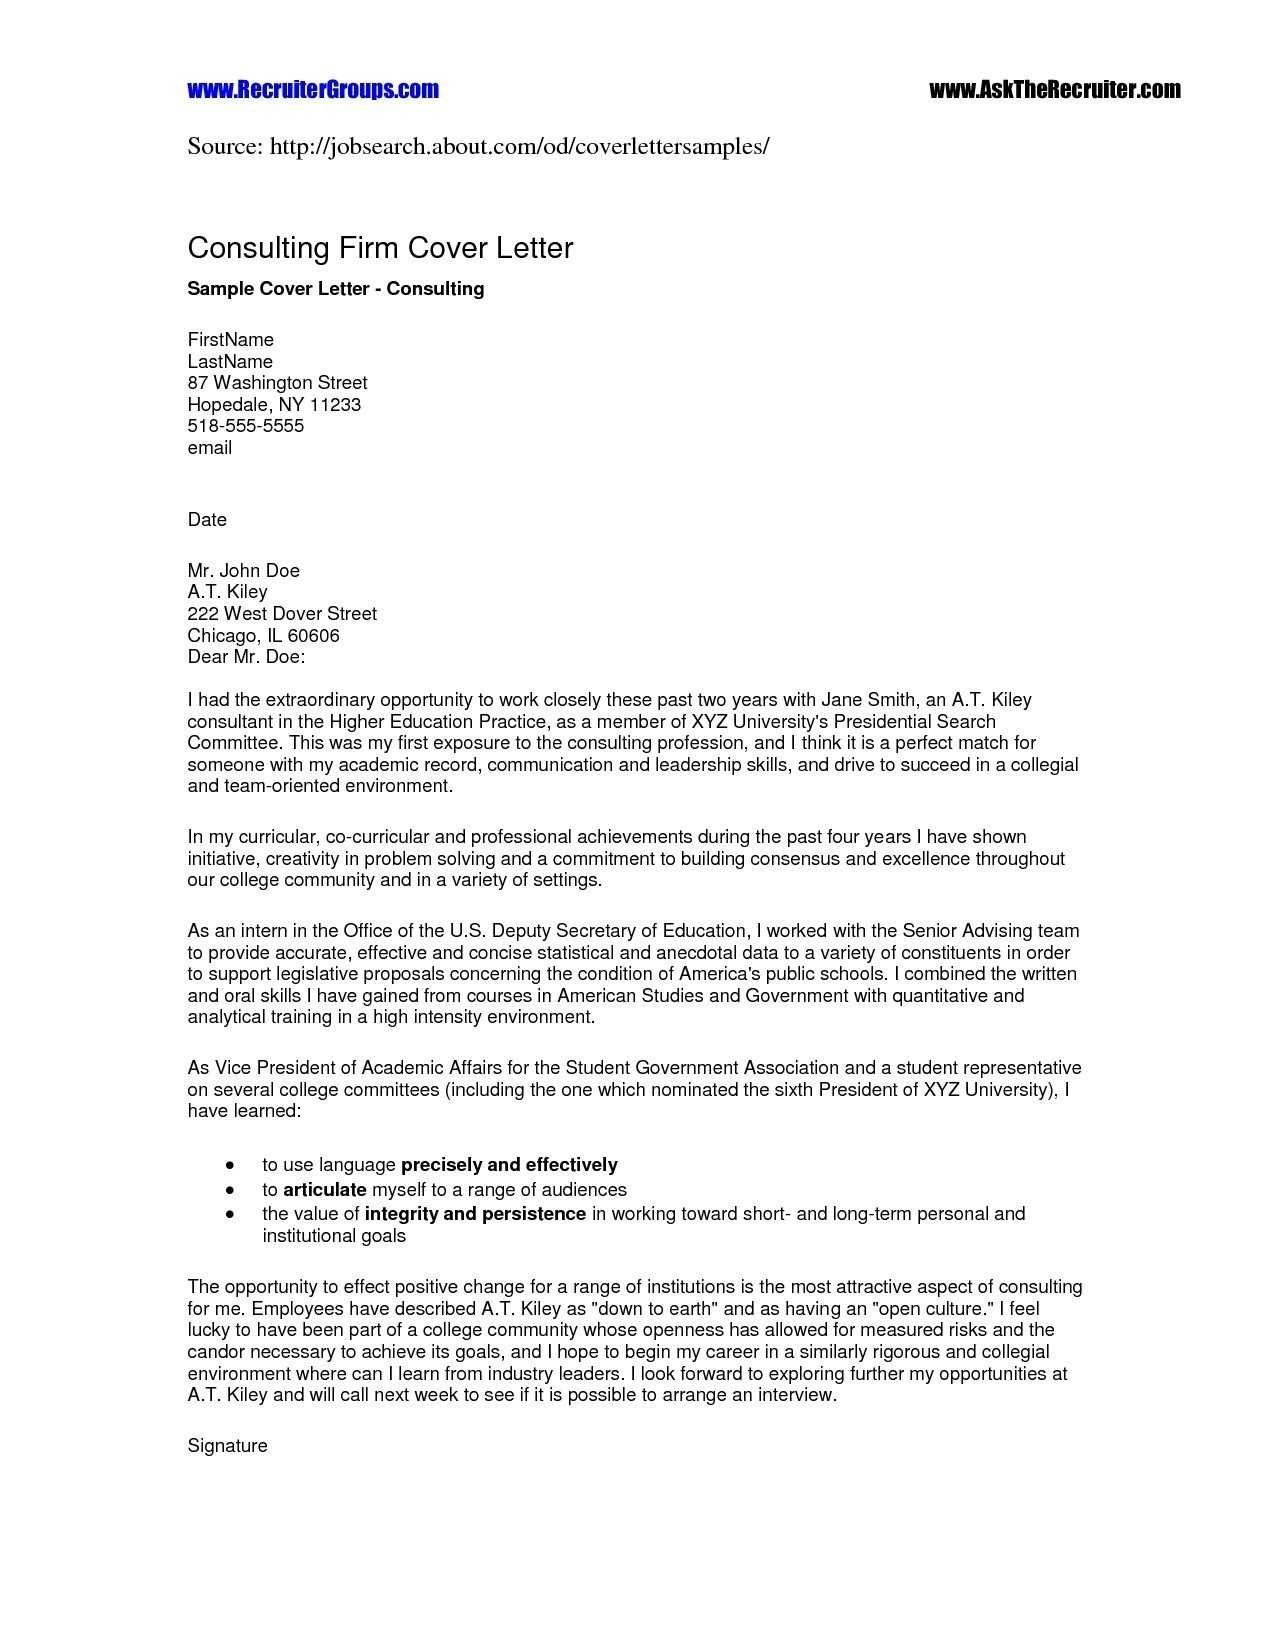 Criminal Record Disclosure Letter Template Samples Letter Template